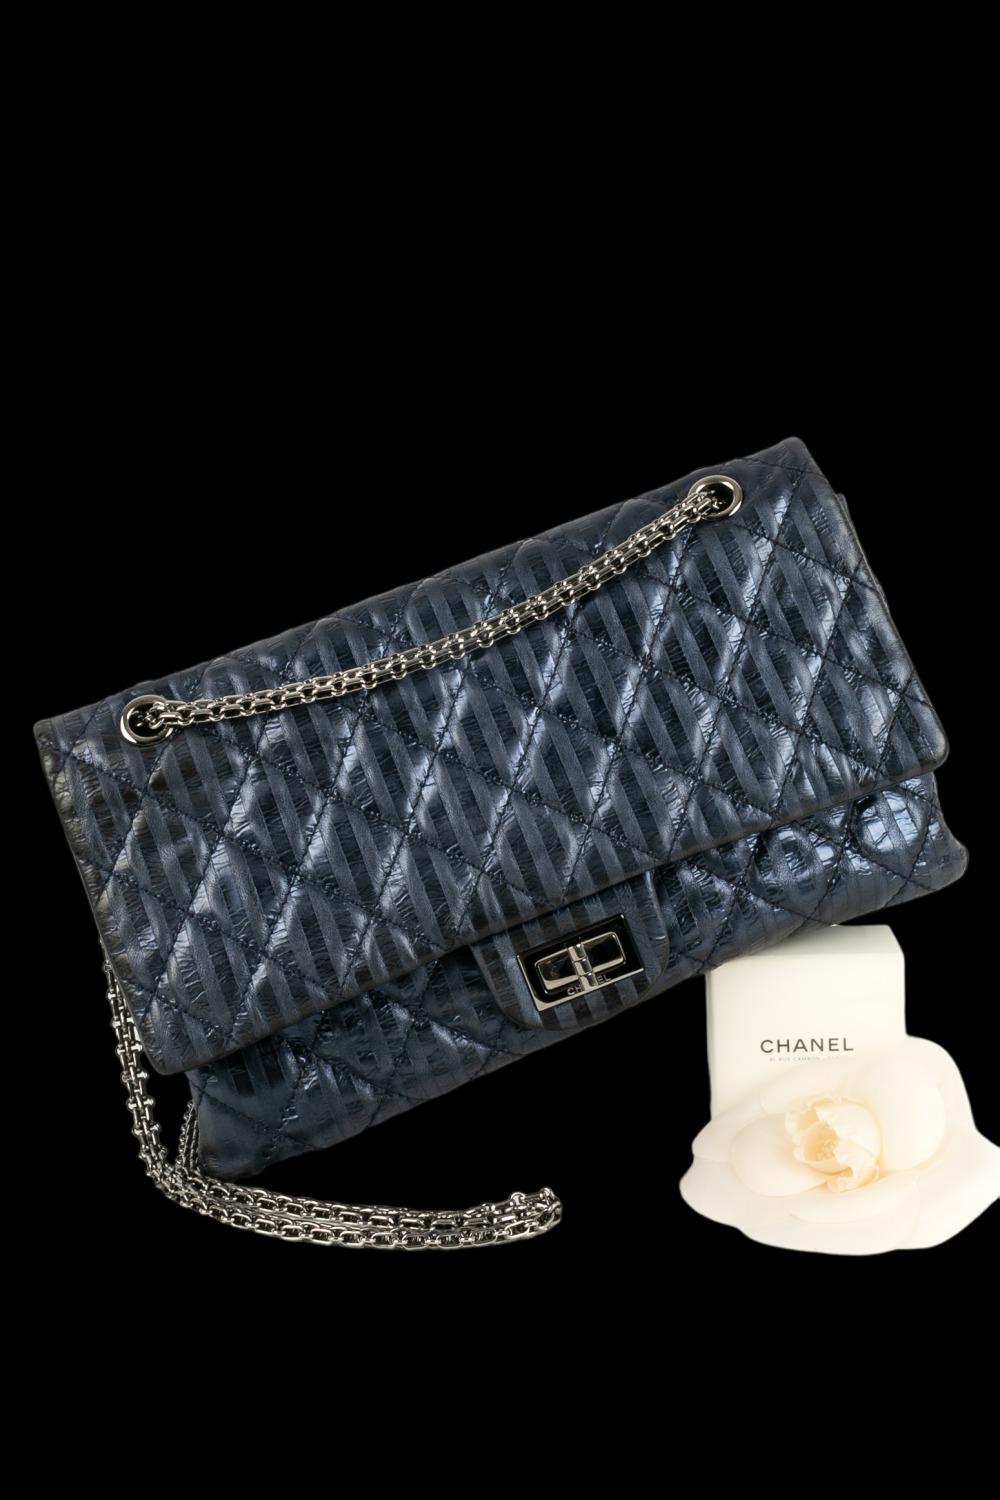 Chanel Blue Metallic Leather Bag, 2008/09 9